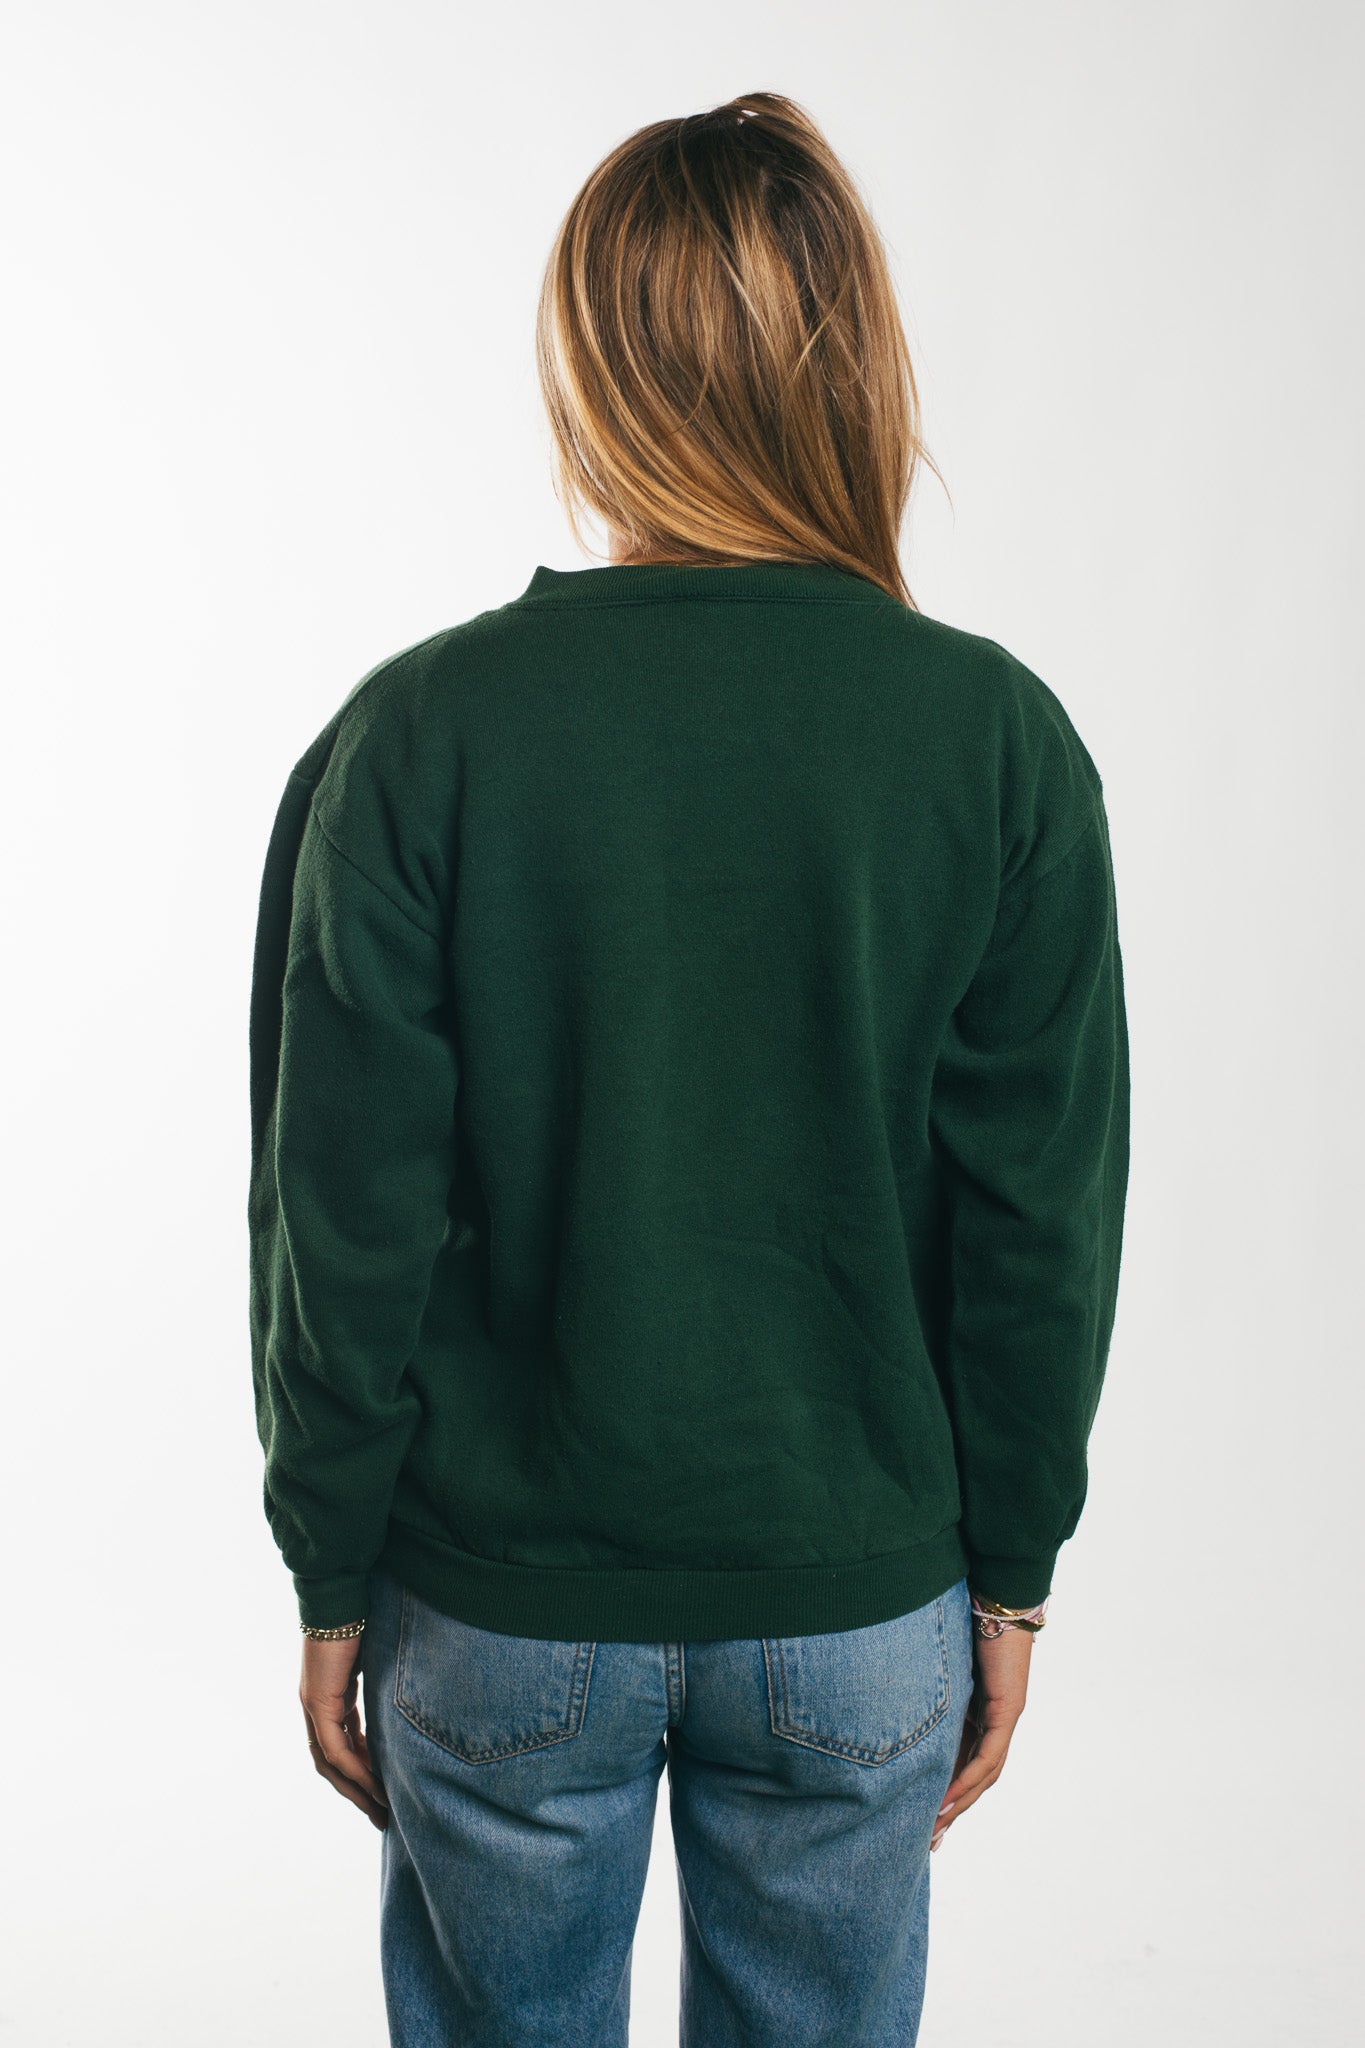 Green Bay Packers - Sweatshirt (S)